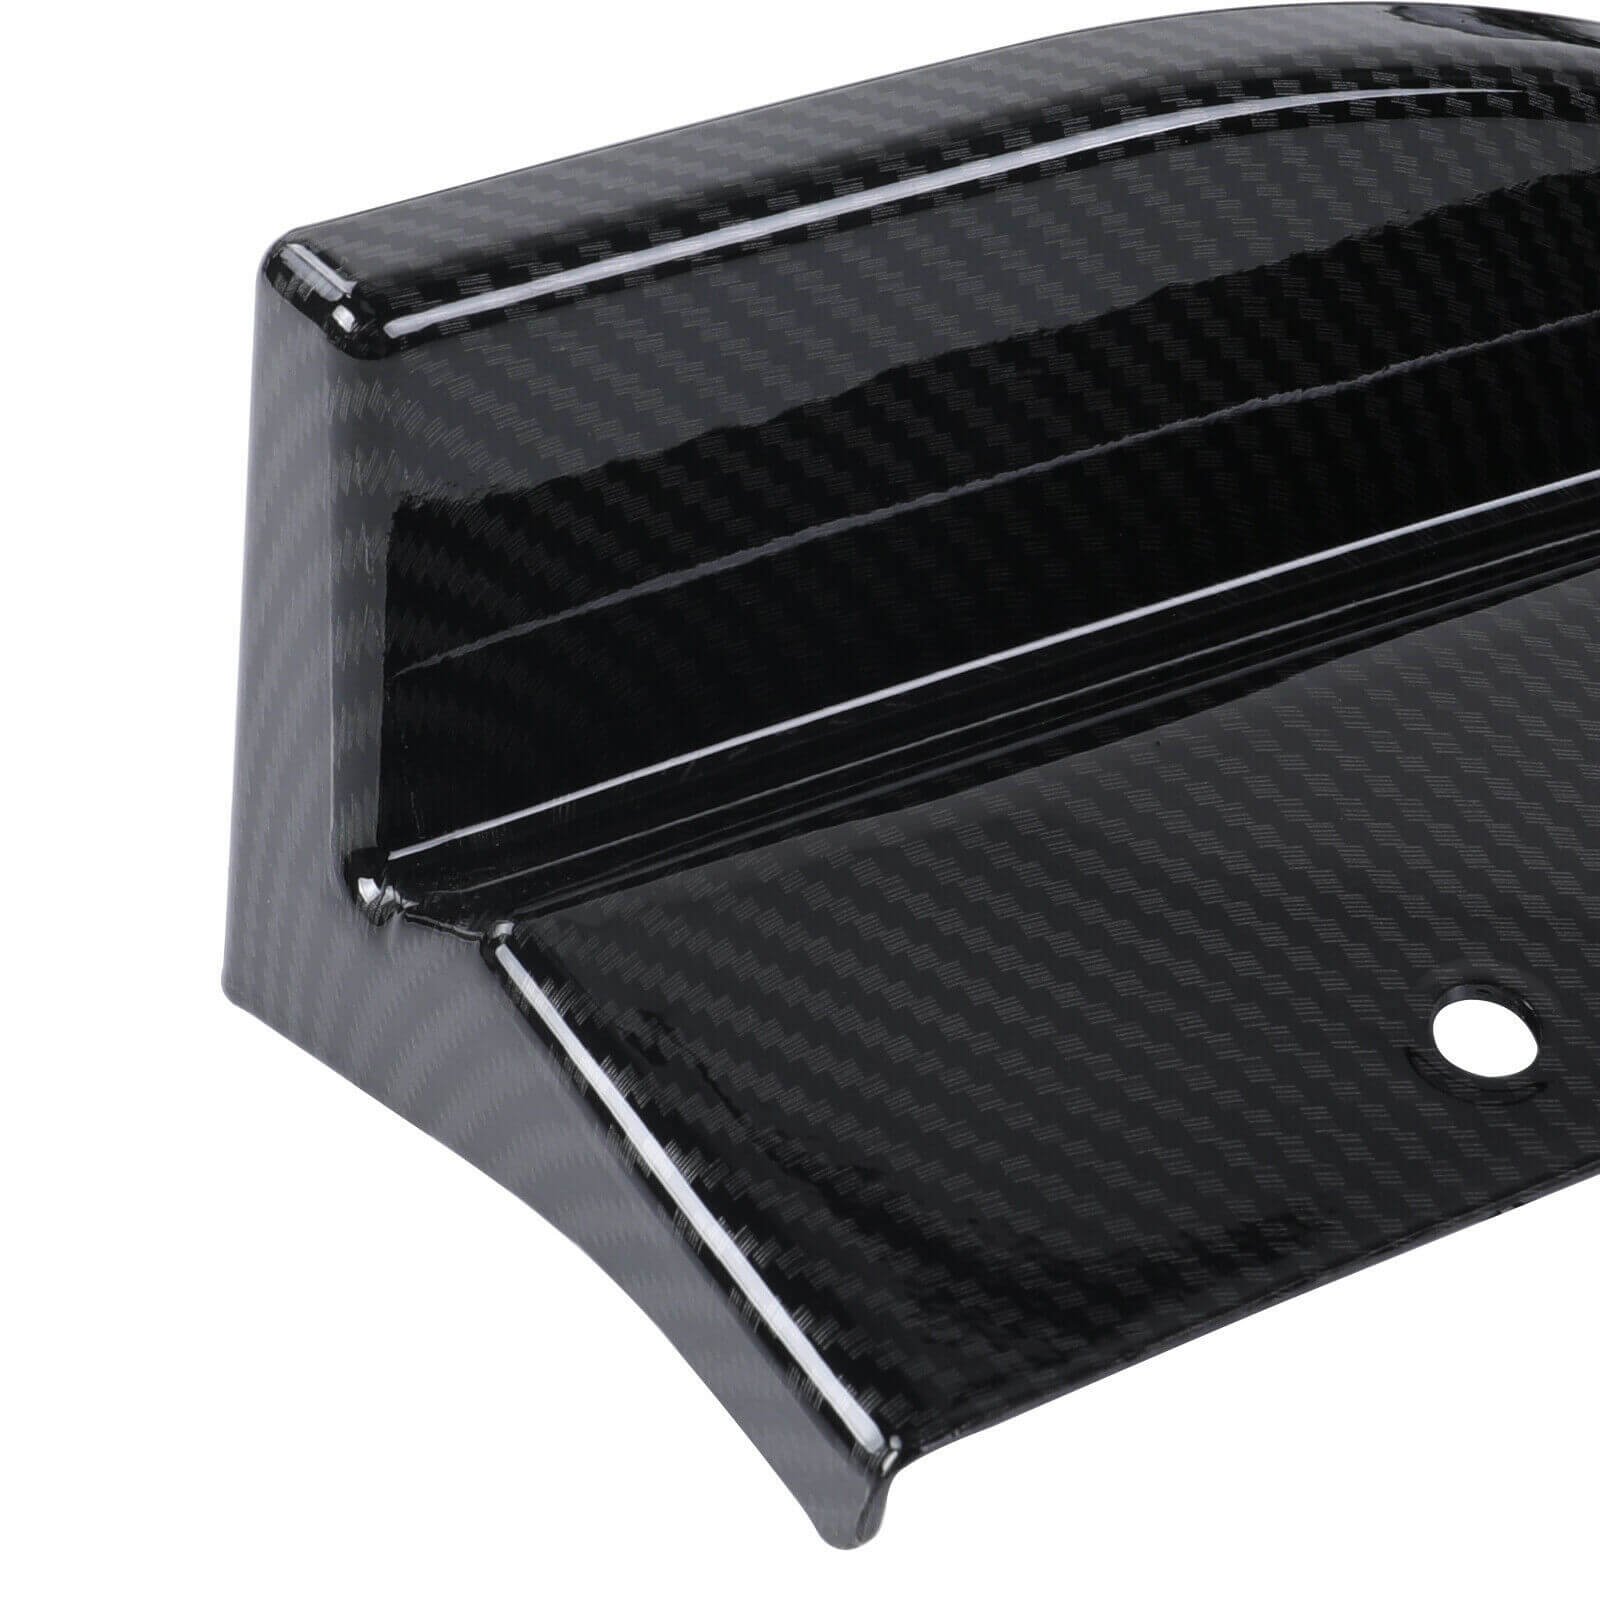 Details of carbon fiber black rear diffuser